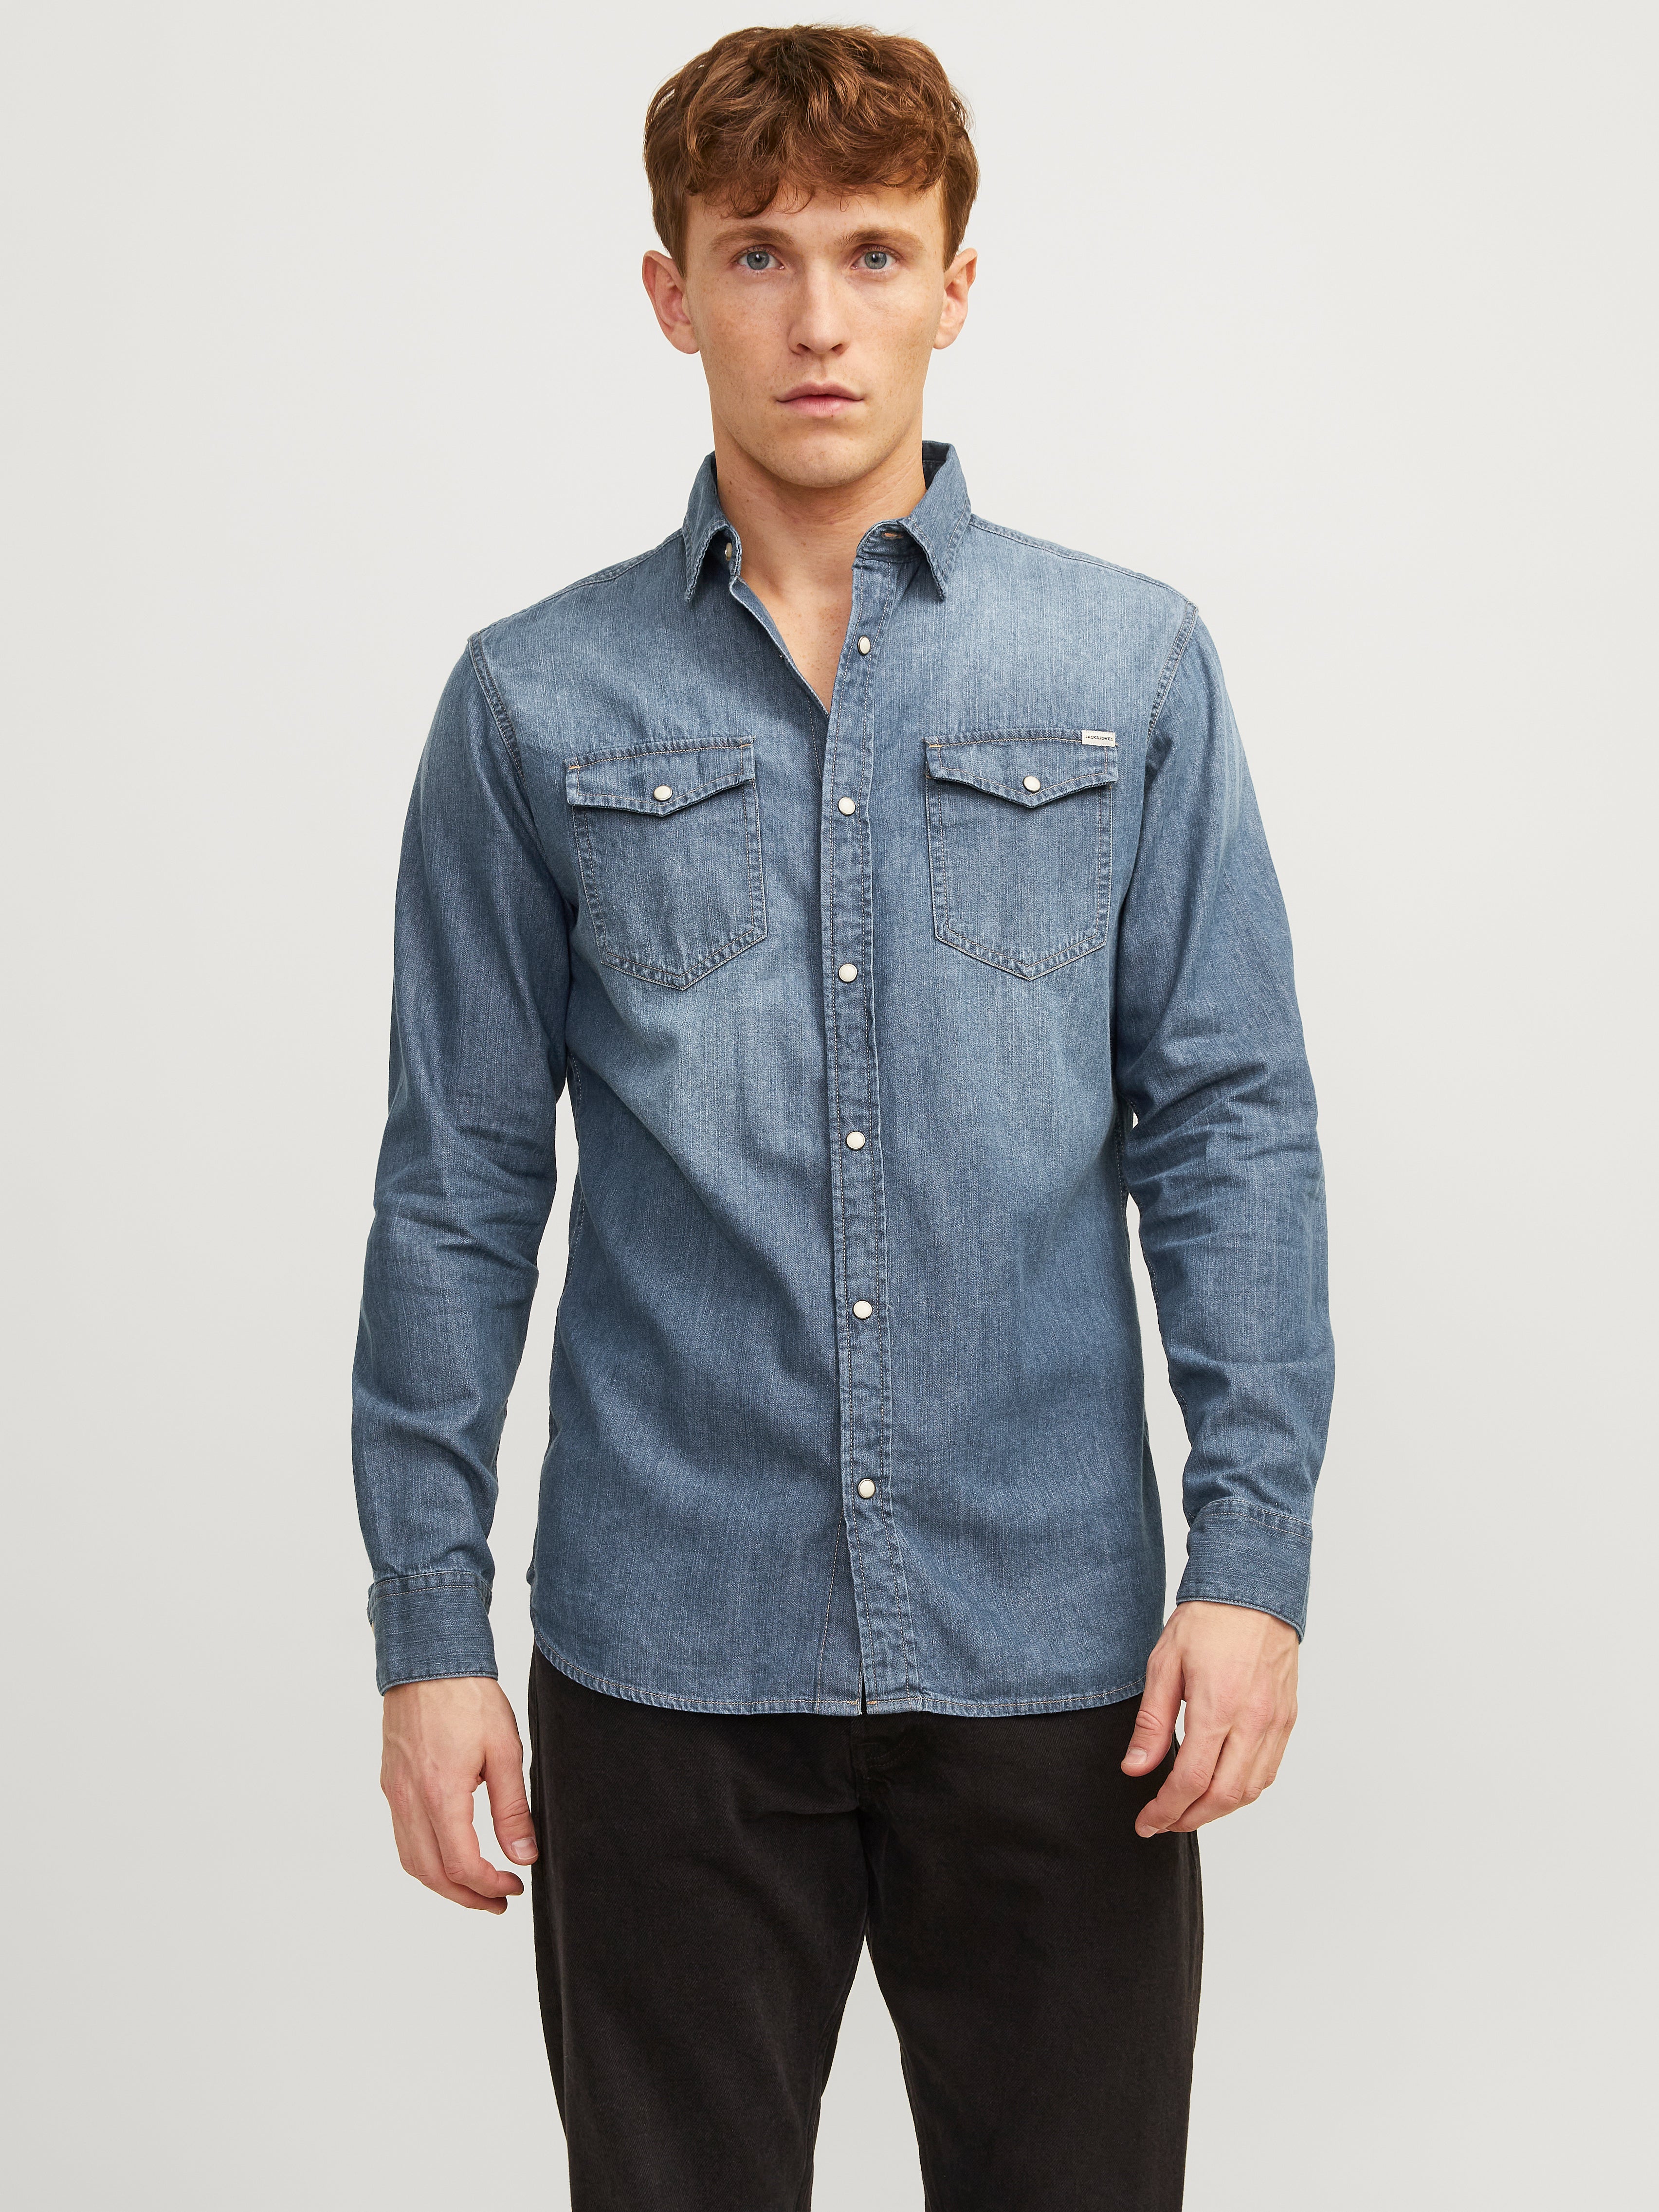 Men's Cotton Cowboy Denim Shirt Snap Button Up Long Sleeve Casual Slim Fit  Dress Shirts with Pockets for Autumn Winter - Walmart.com